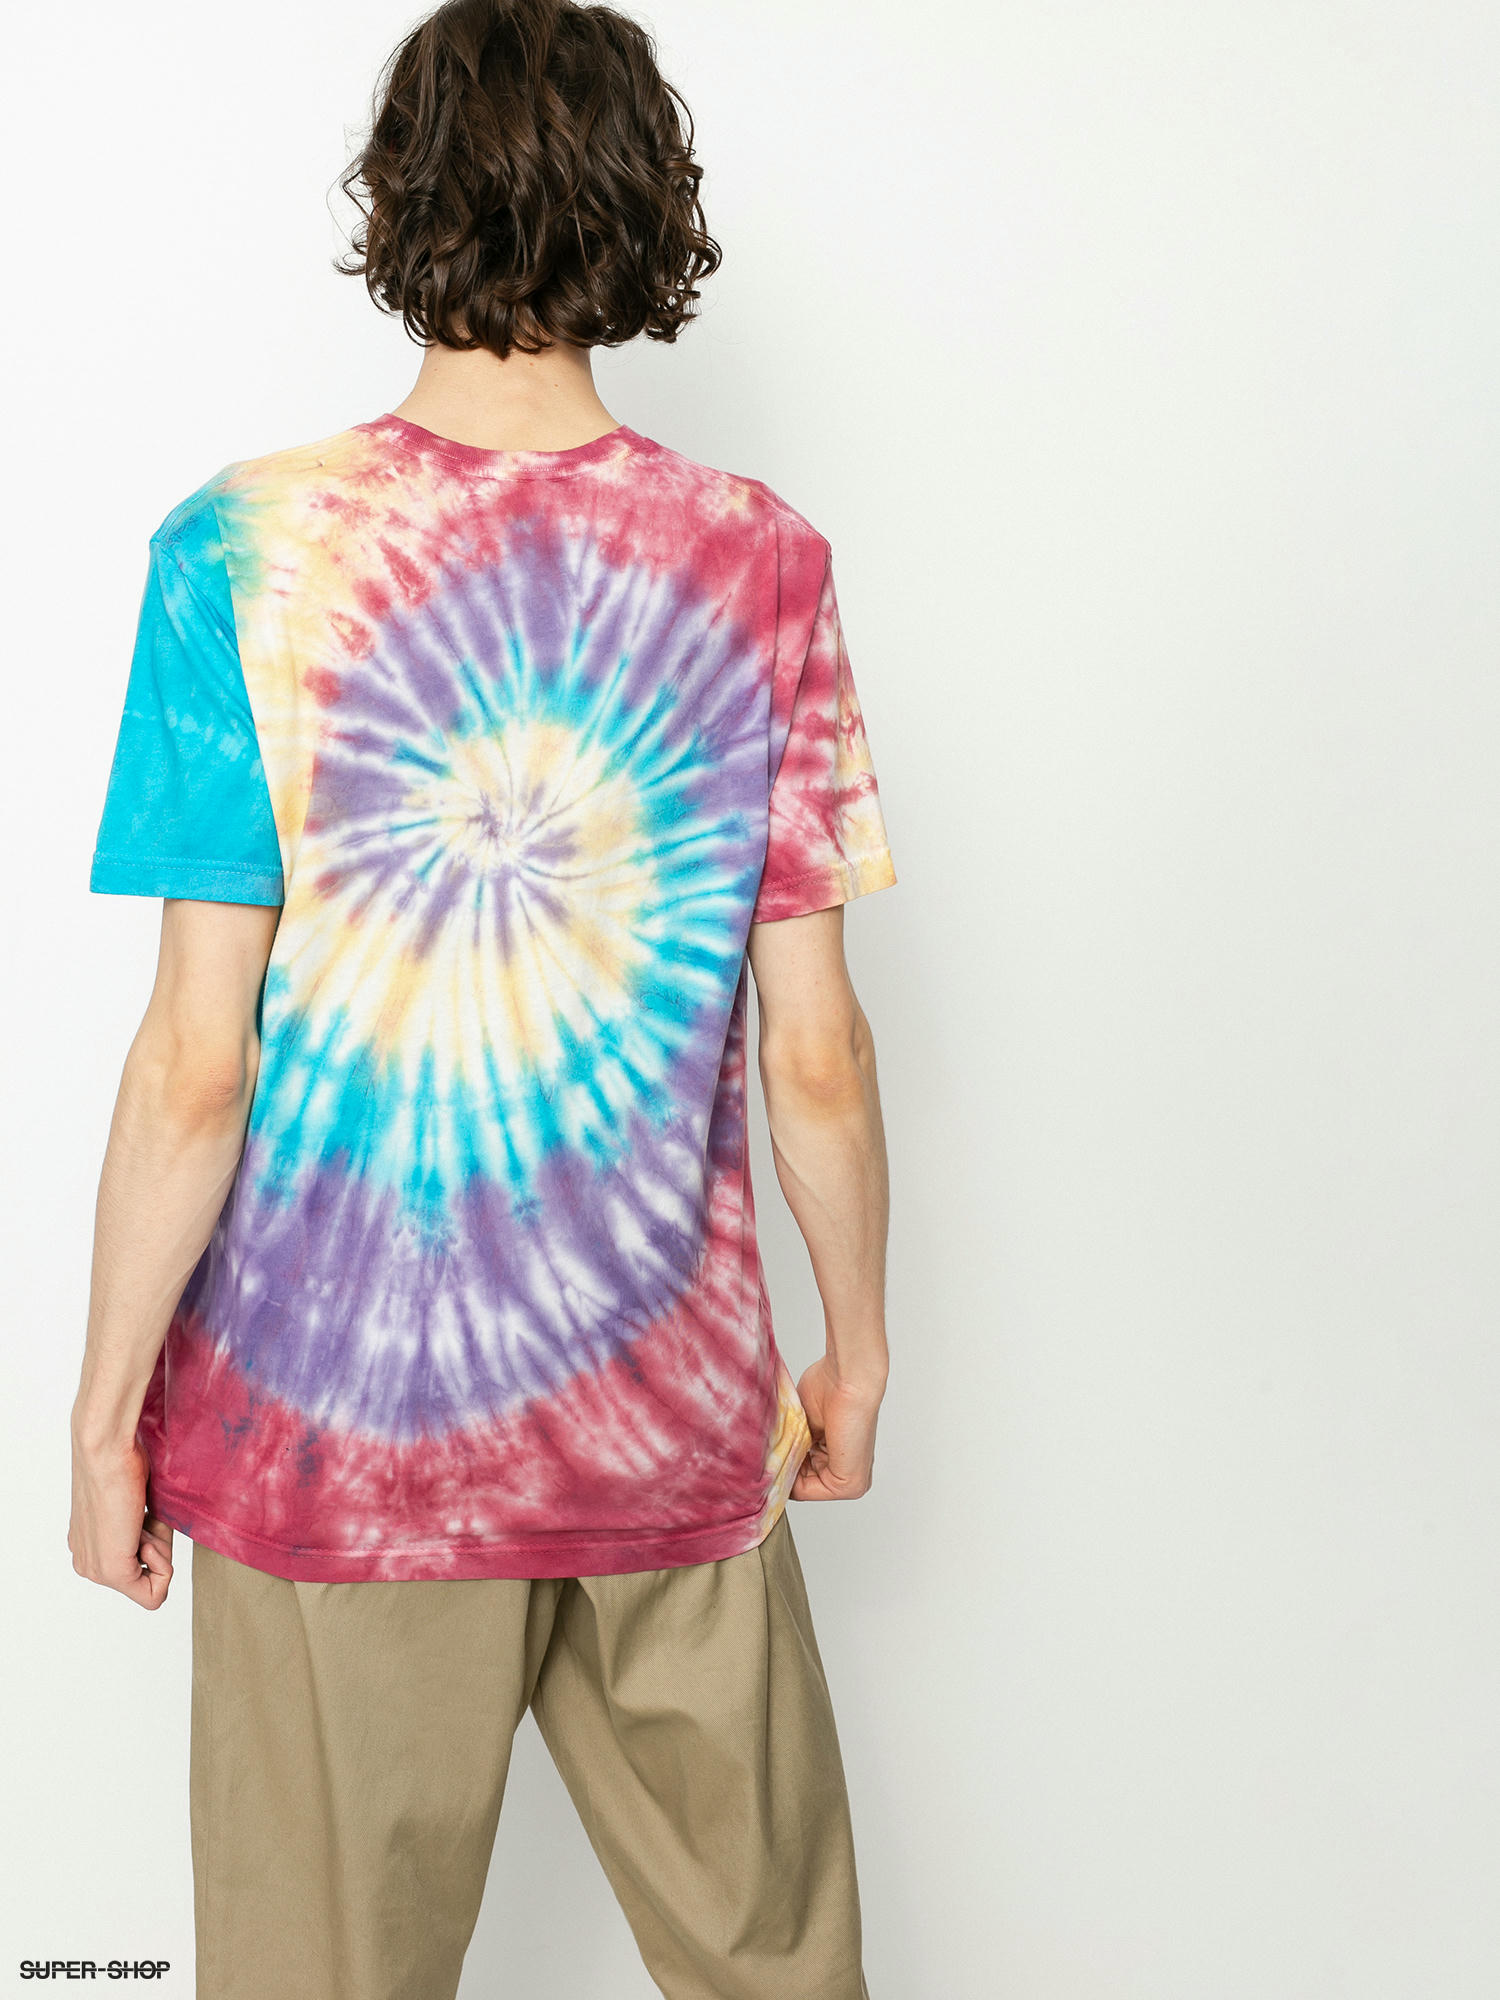 CREATURE Tie Dye Camo Logo Skateboard T Shirt Tee 